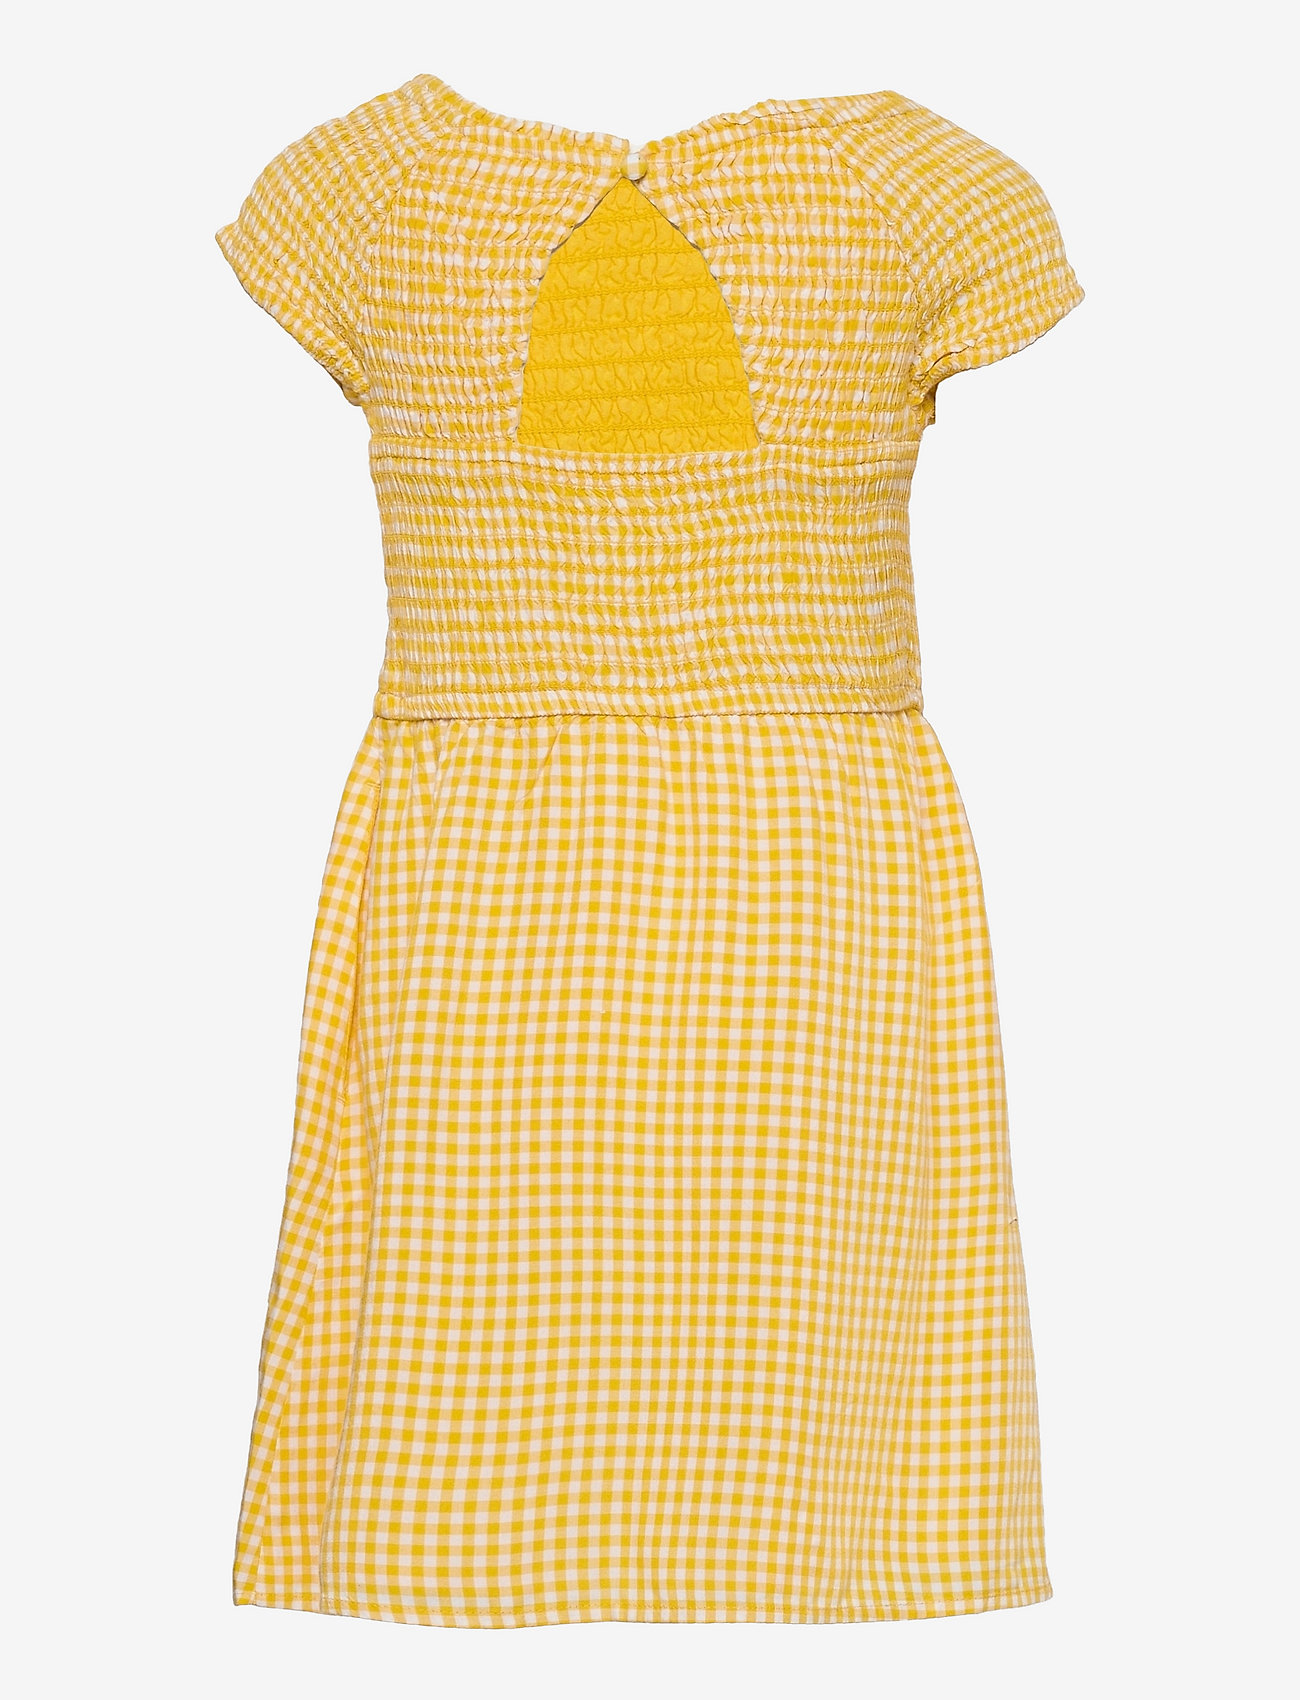 Abercrombie & Fitch - kids GIRLS DRESSES - kurzärmelige freizeitkleider - light yellow patt - 1